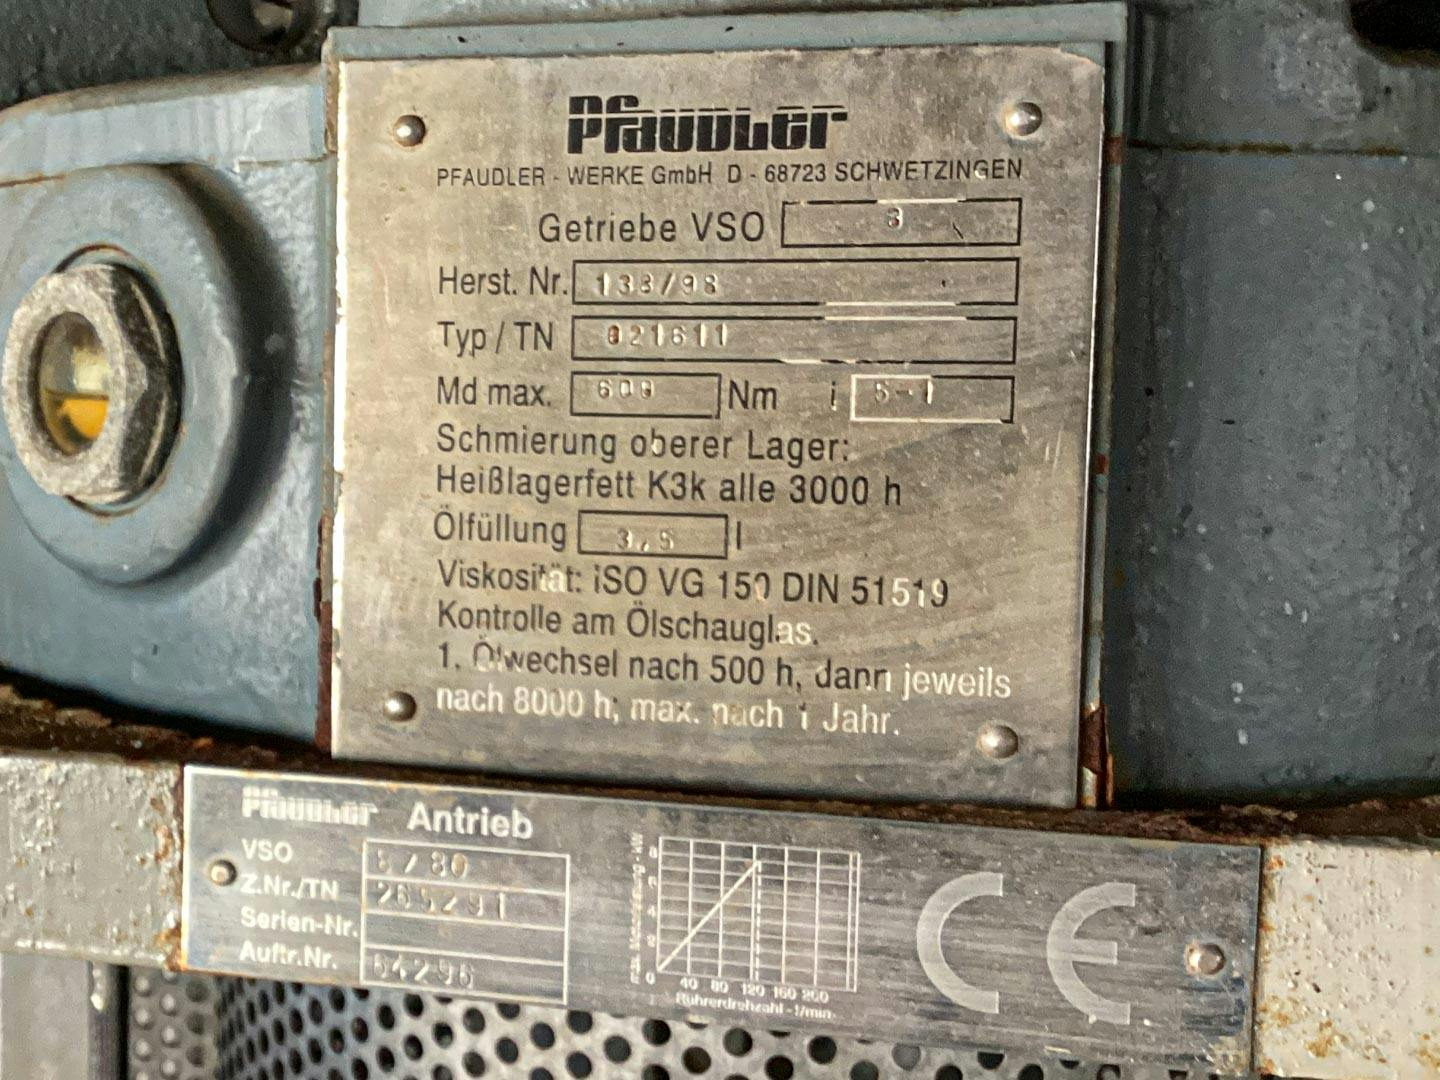 Pfaudler-werke BE2500 - Tanque mezclador - image 12